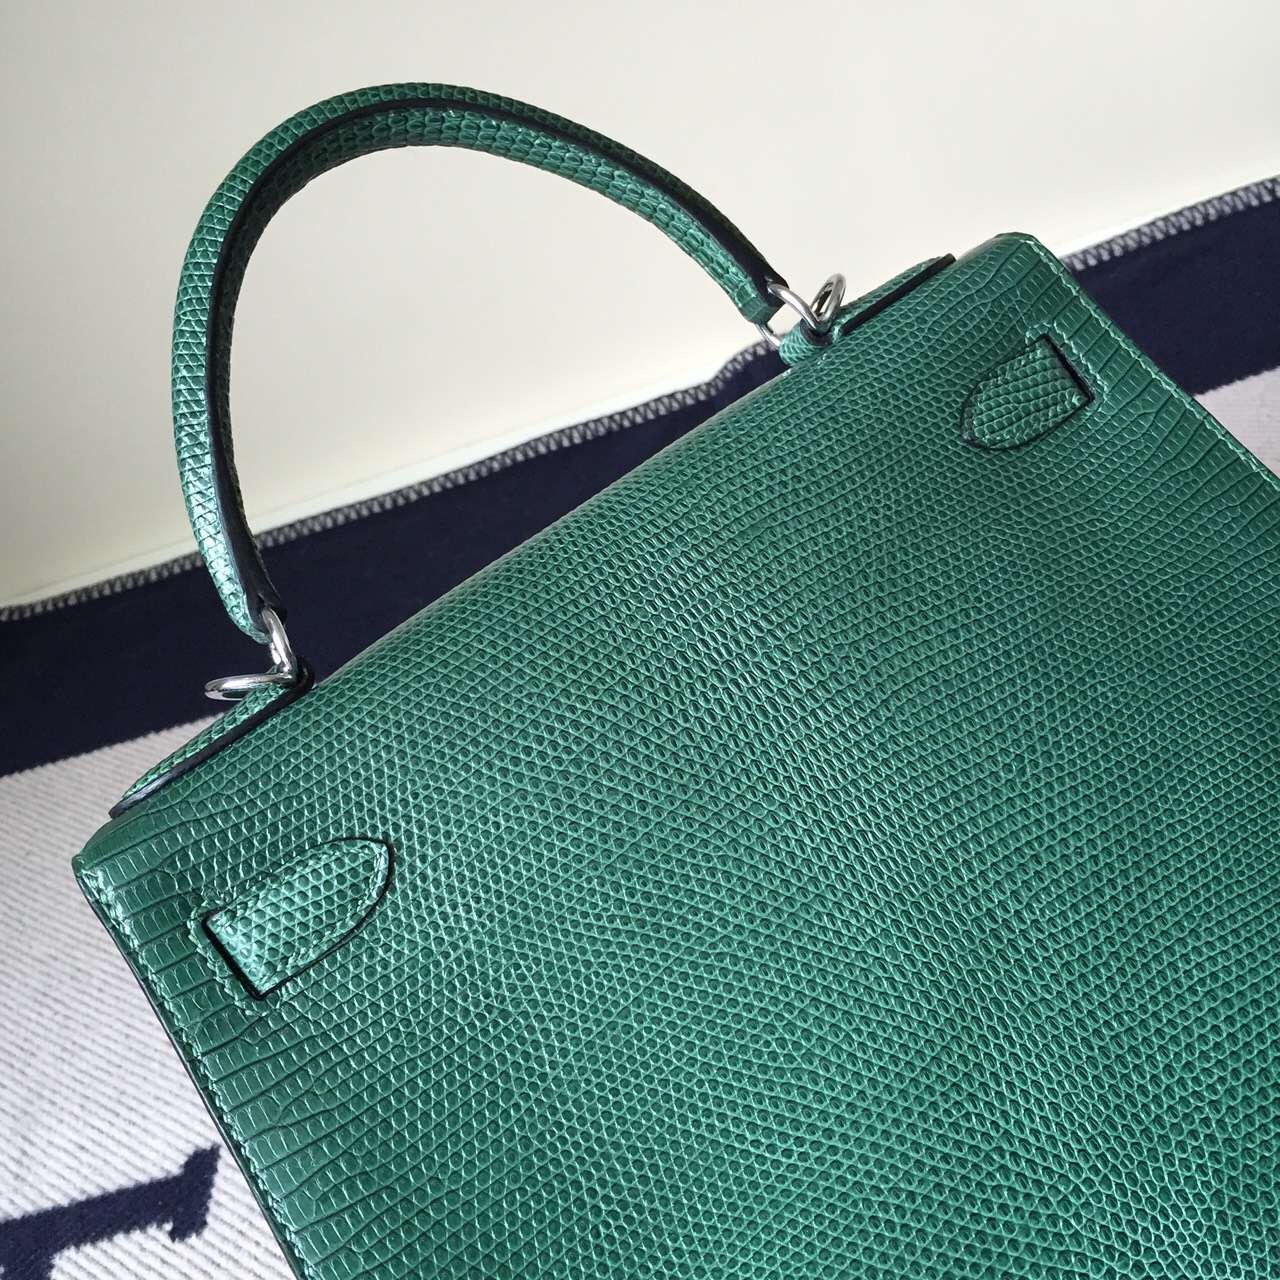 Fashion Hermes Bag Lizard Skin Leather Sellier Kelly28cm in CK67 Emerald Green